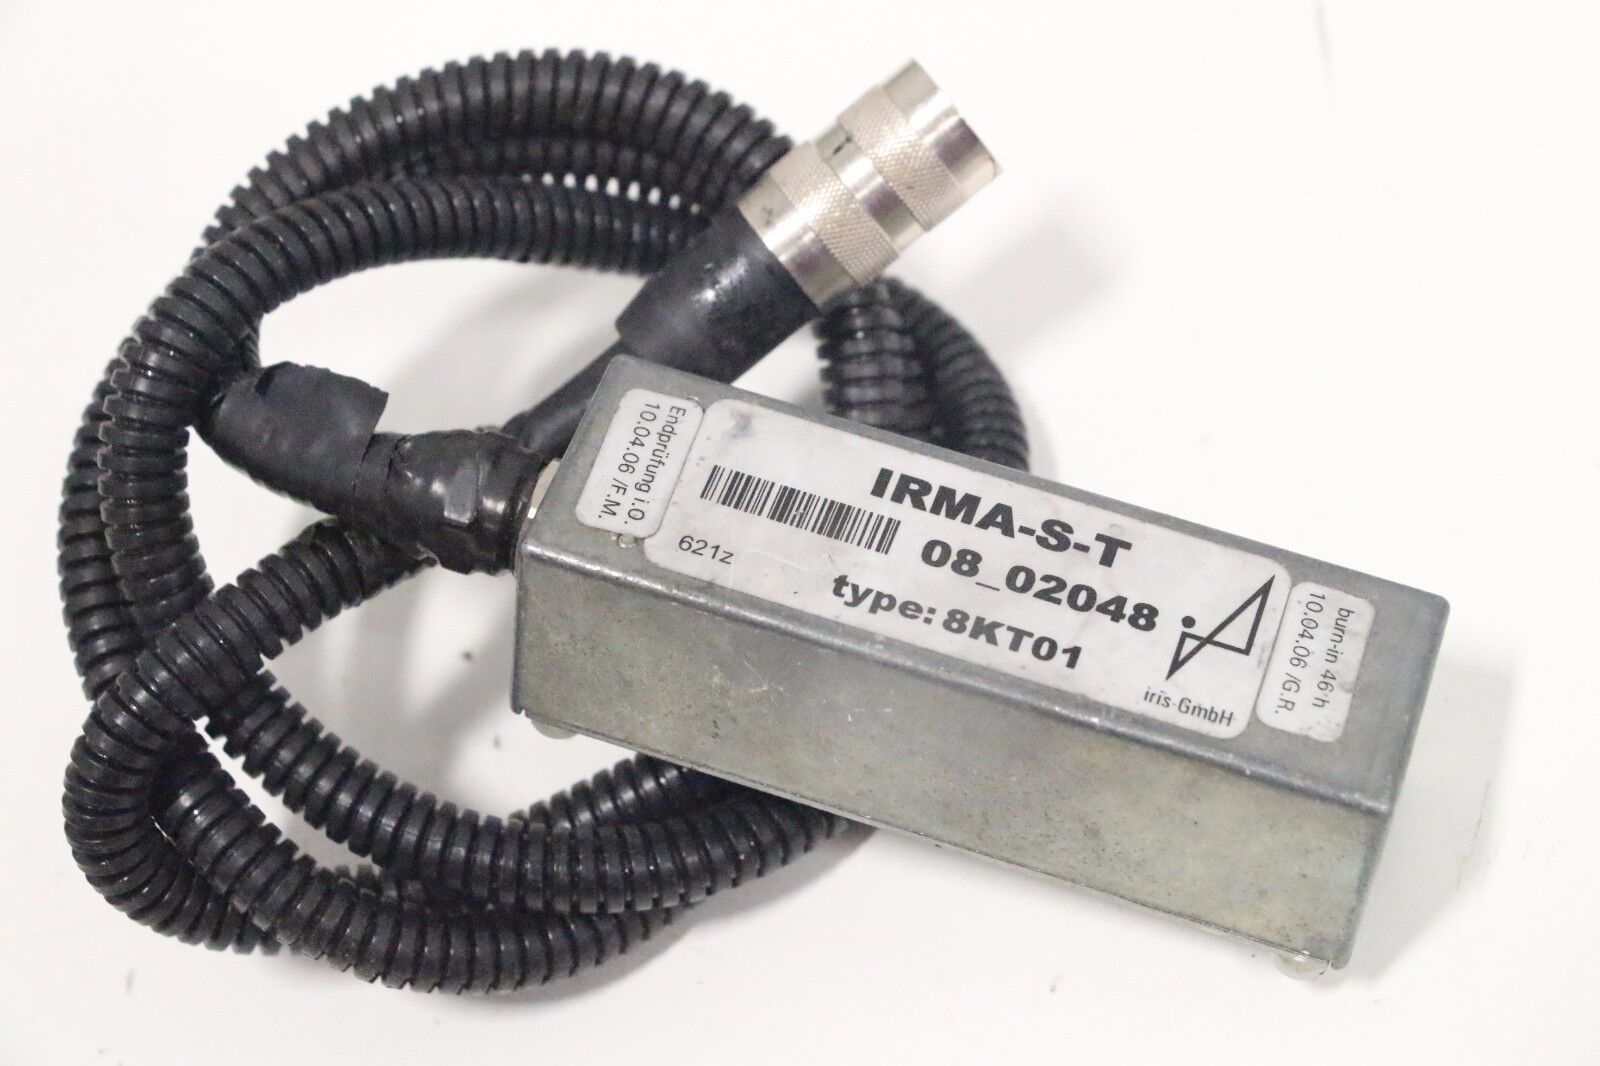 IRIS GmbH Infrared Sensor 8KT01 IRMA-S-T 08_02048 Do 15% rabatu na zestaw